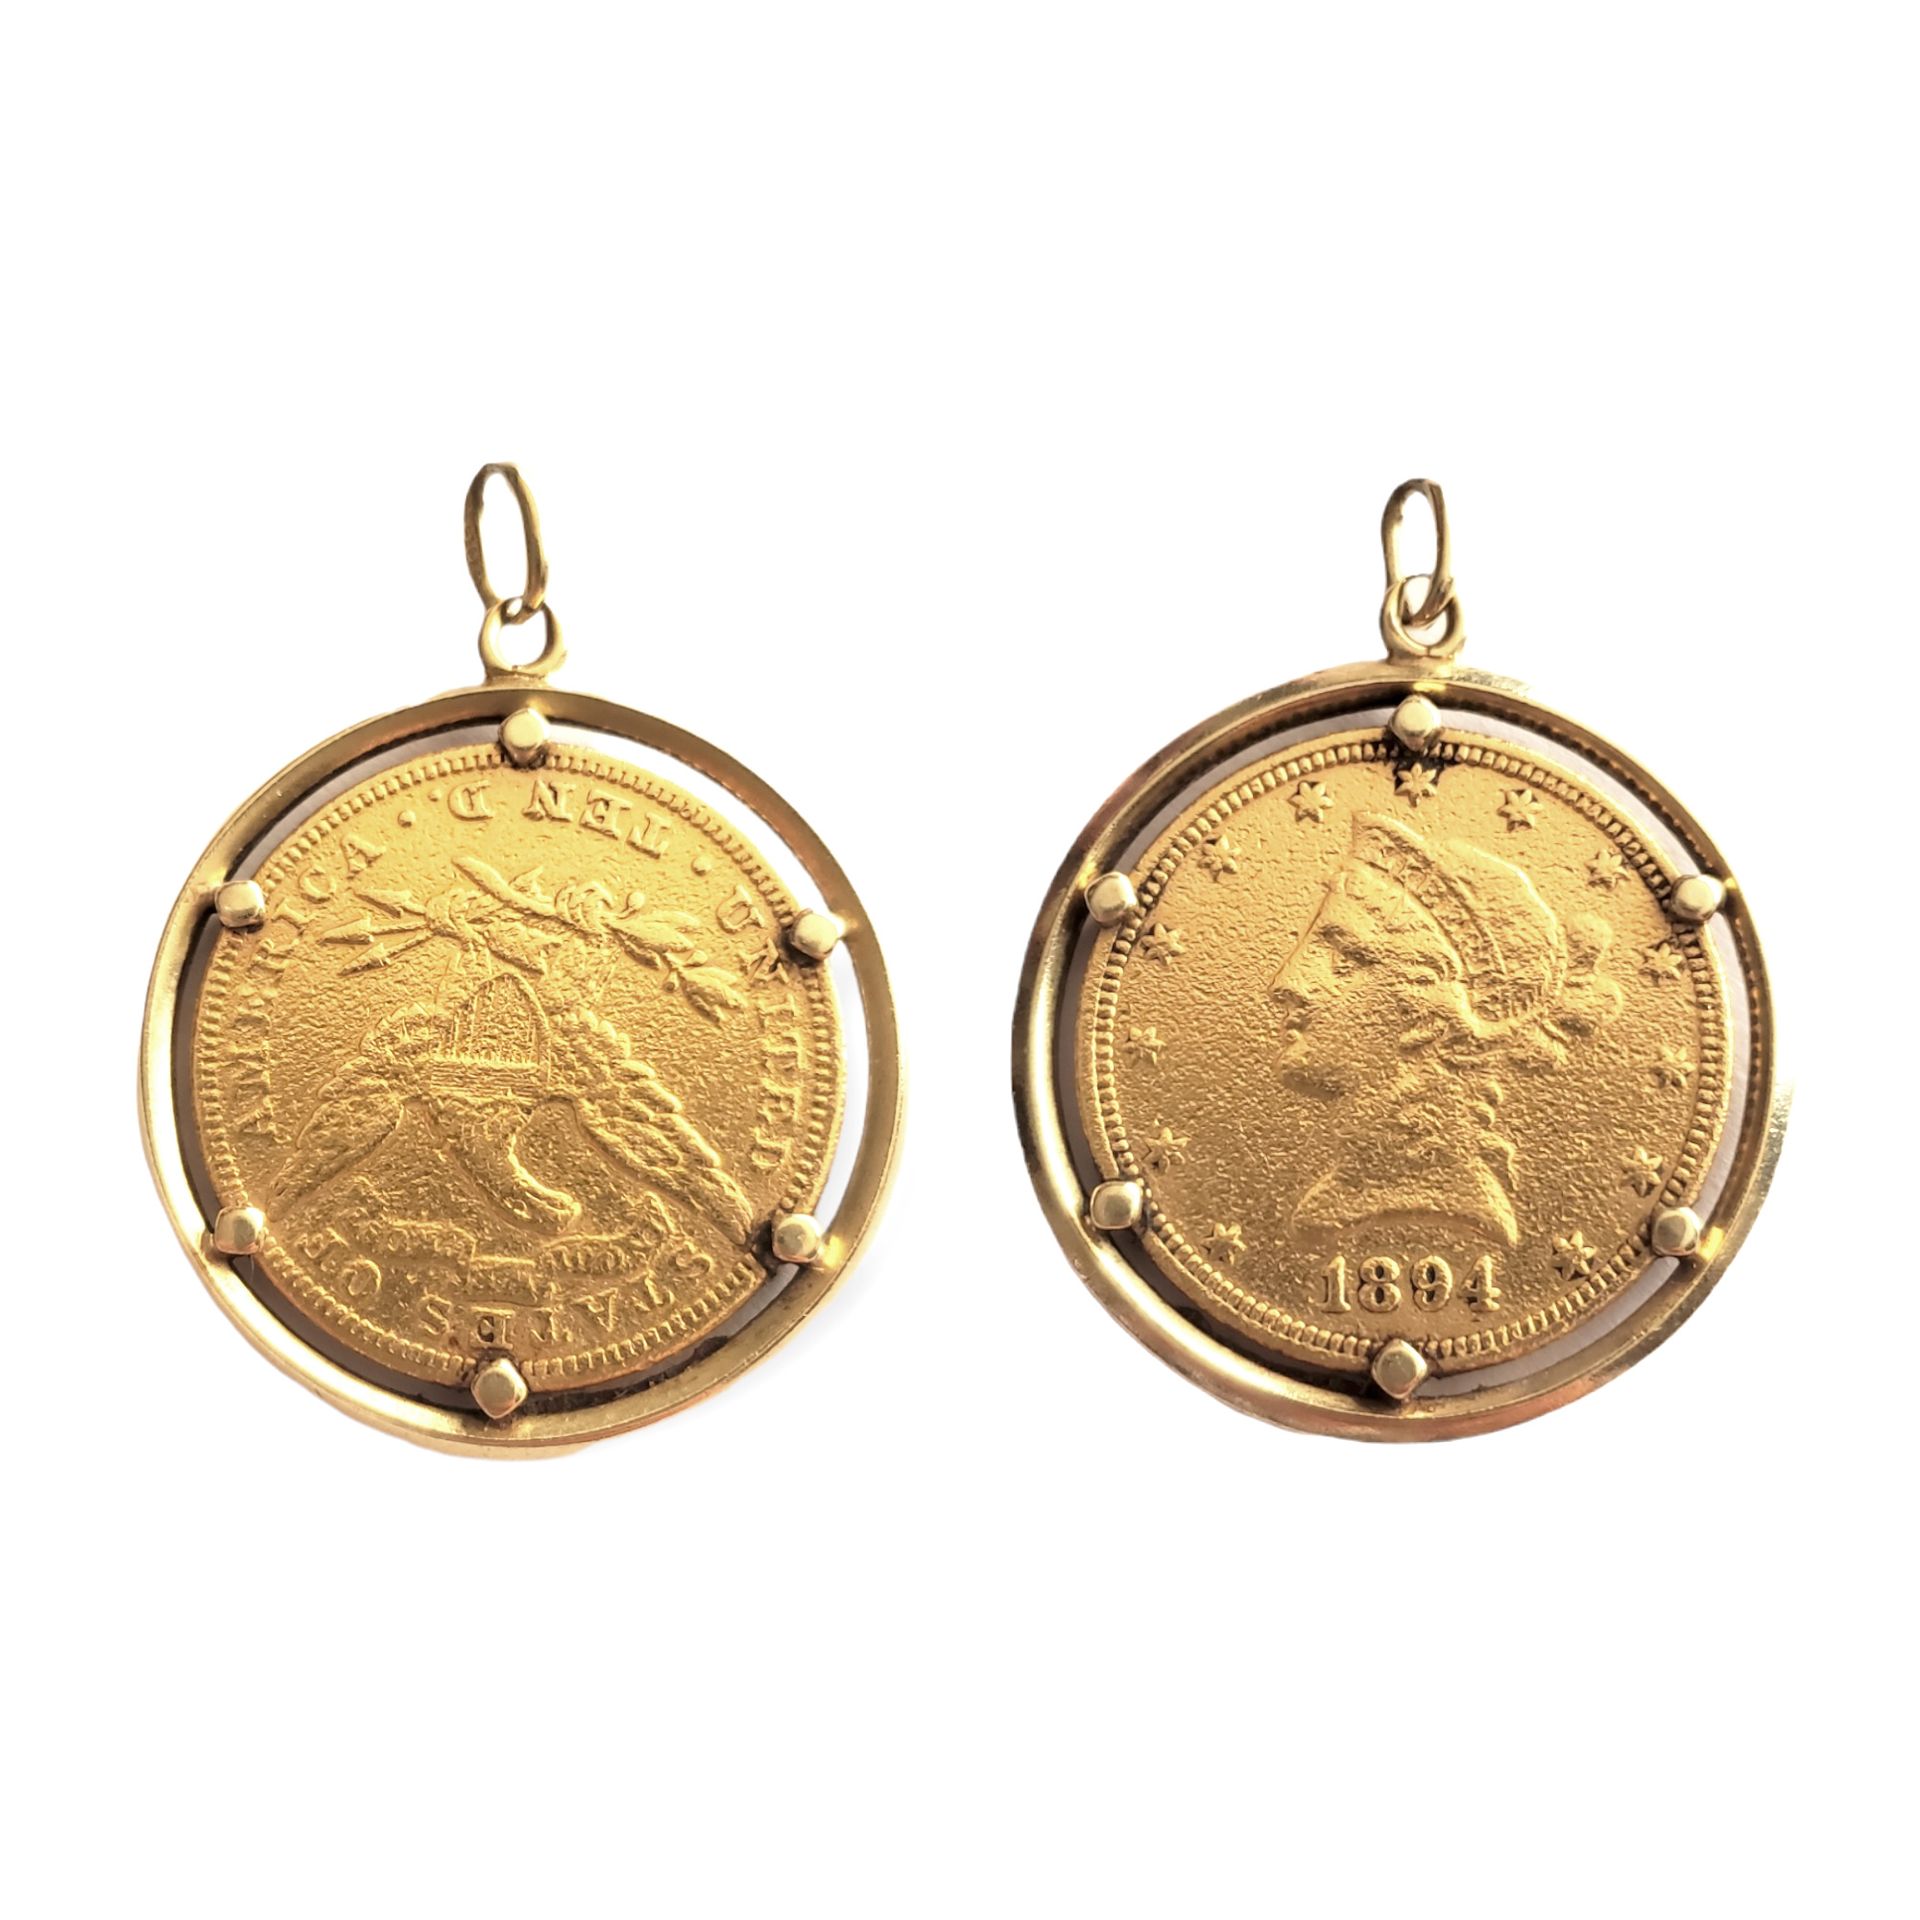 Colgante con moneda de oro puro 1894年，使用10美元的美国货币 "Coronet "在黑色岩石上铸成的Colgante。

&hellip;